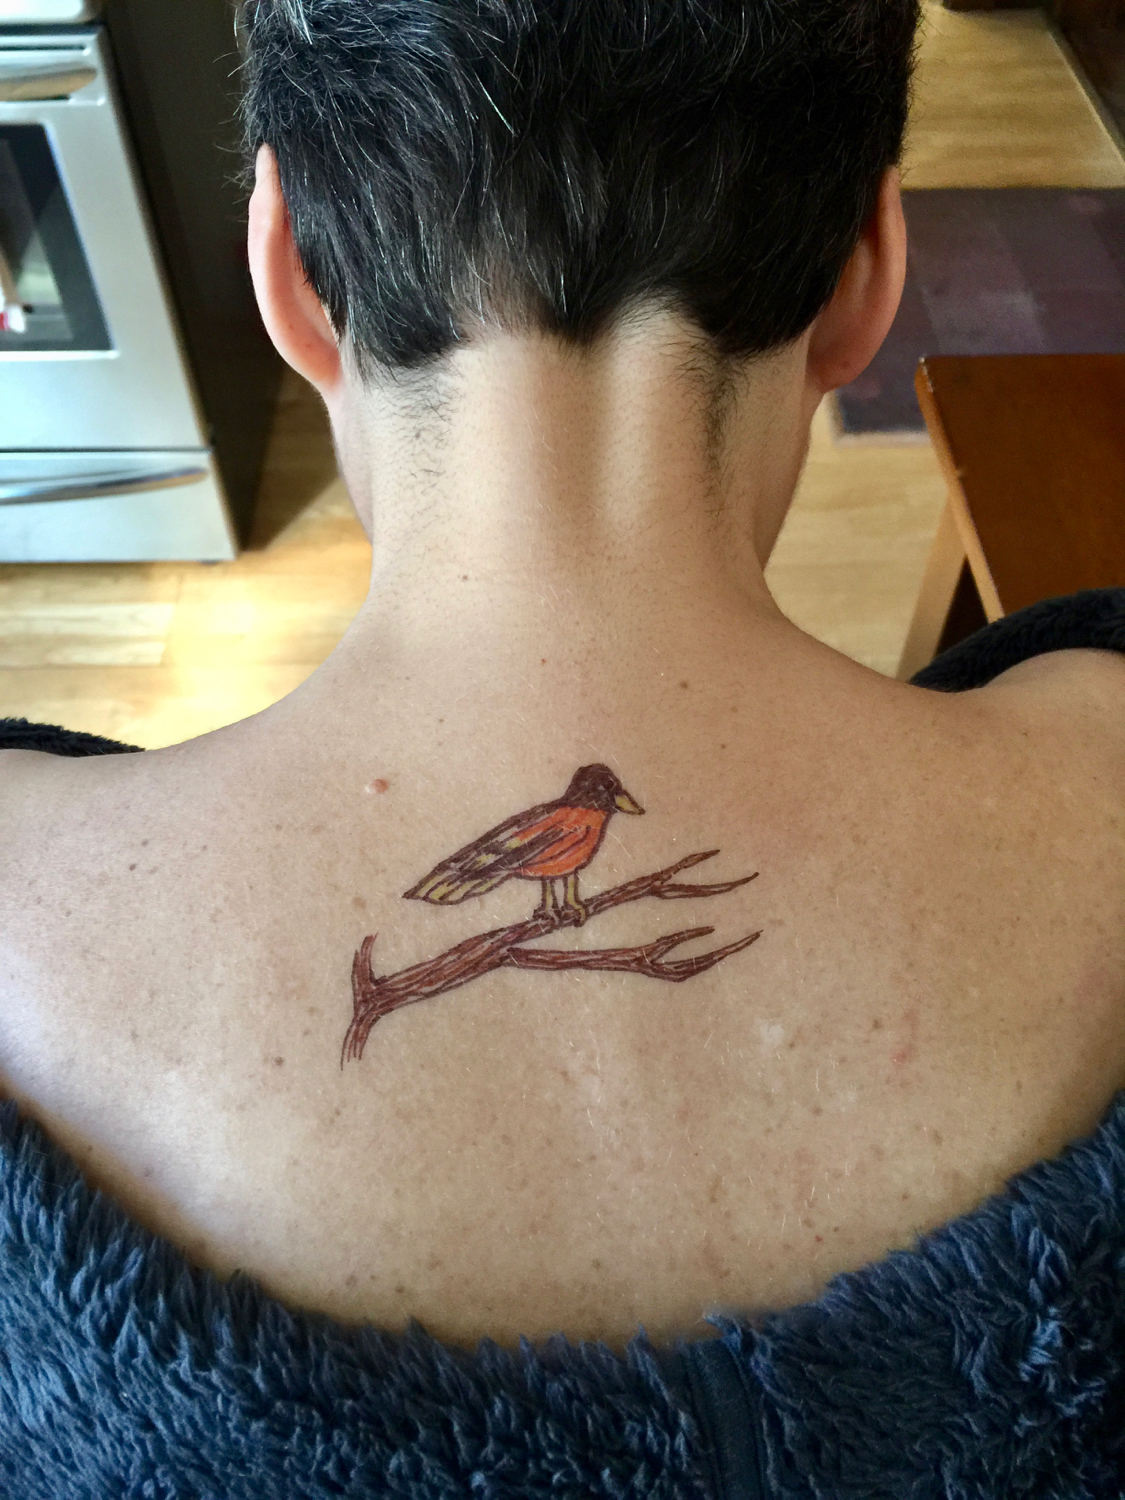 Temporary tattoo — copyright Trace Meek